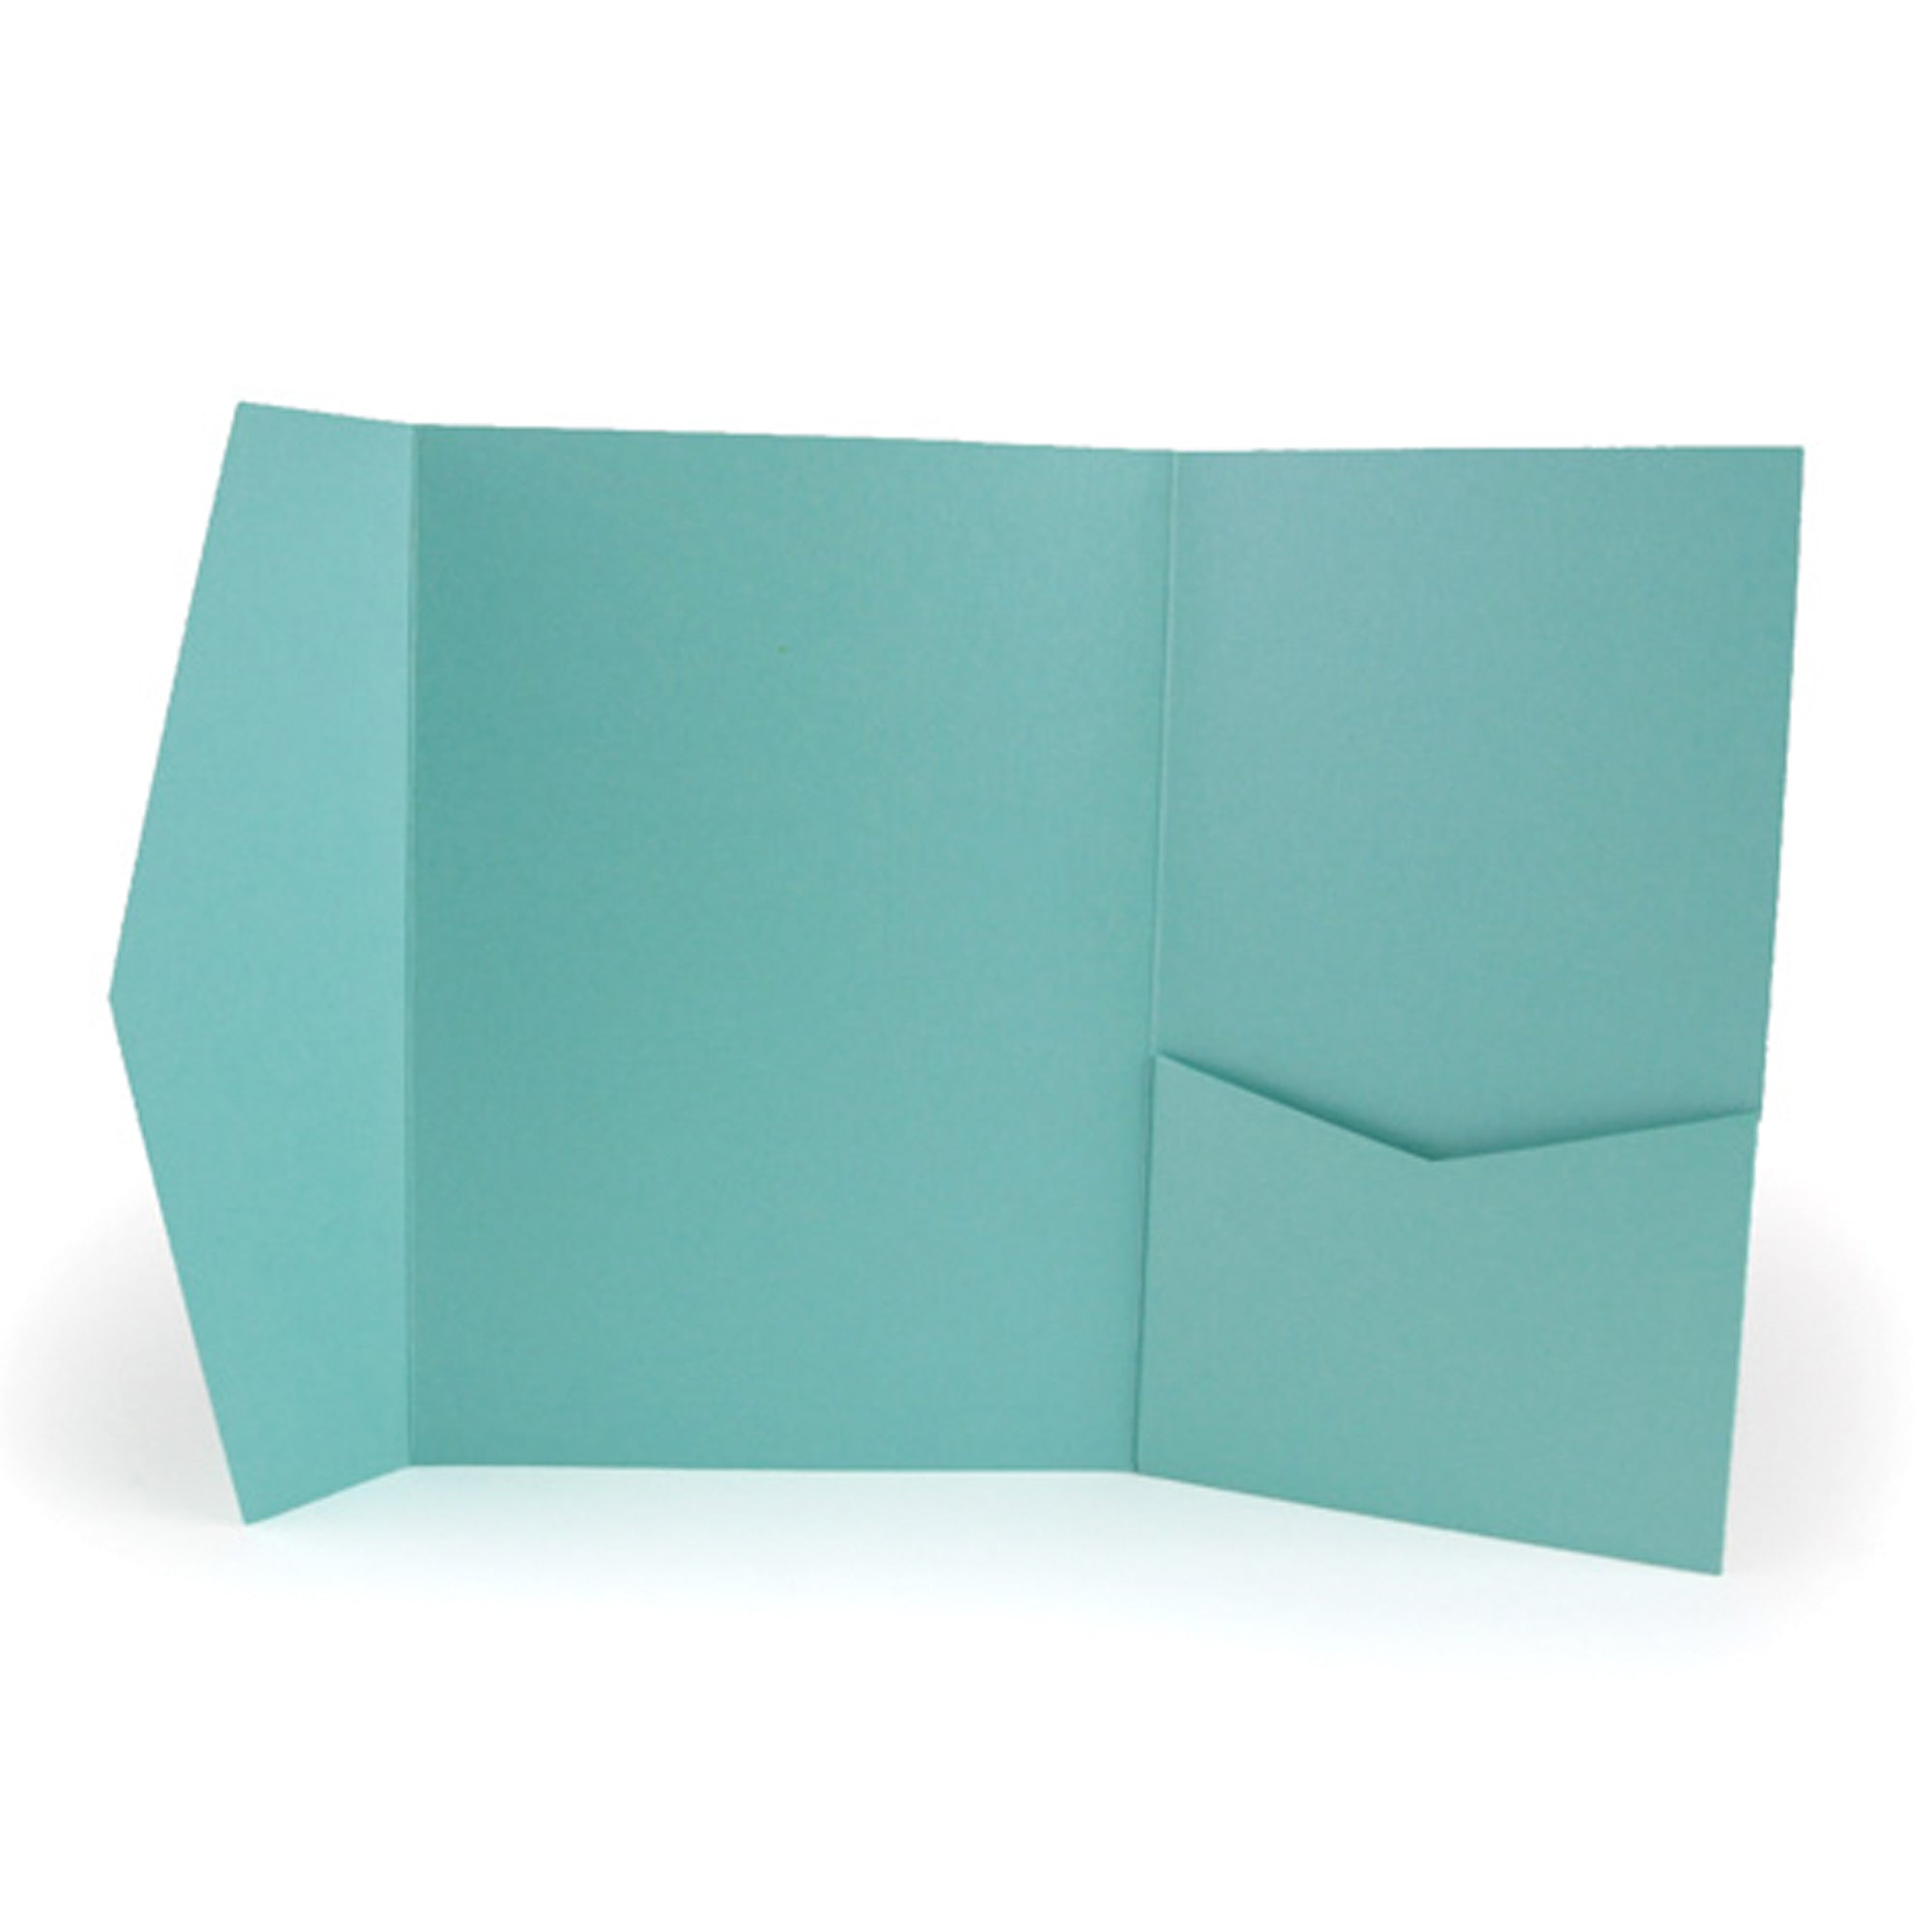 Pocket Fold Invitation Holder Wedding Supplies Blue Teal Metallic